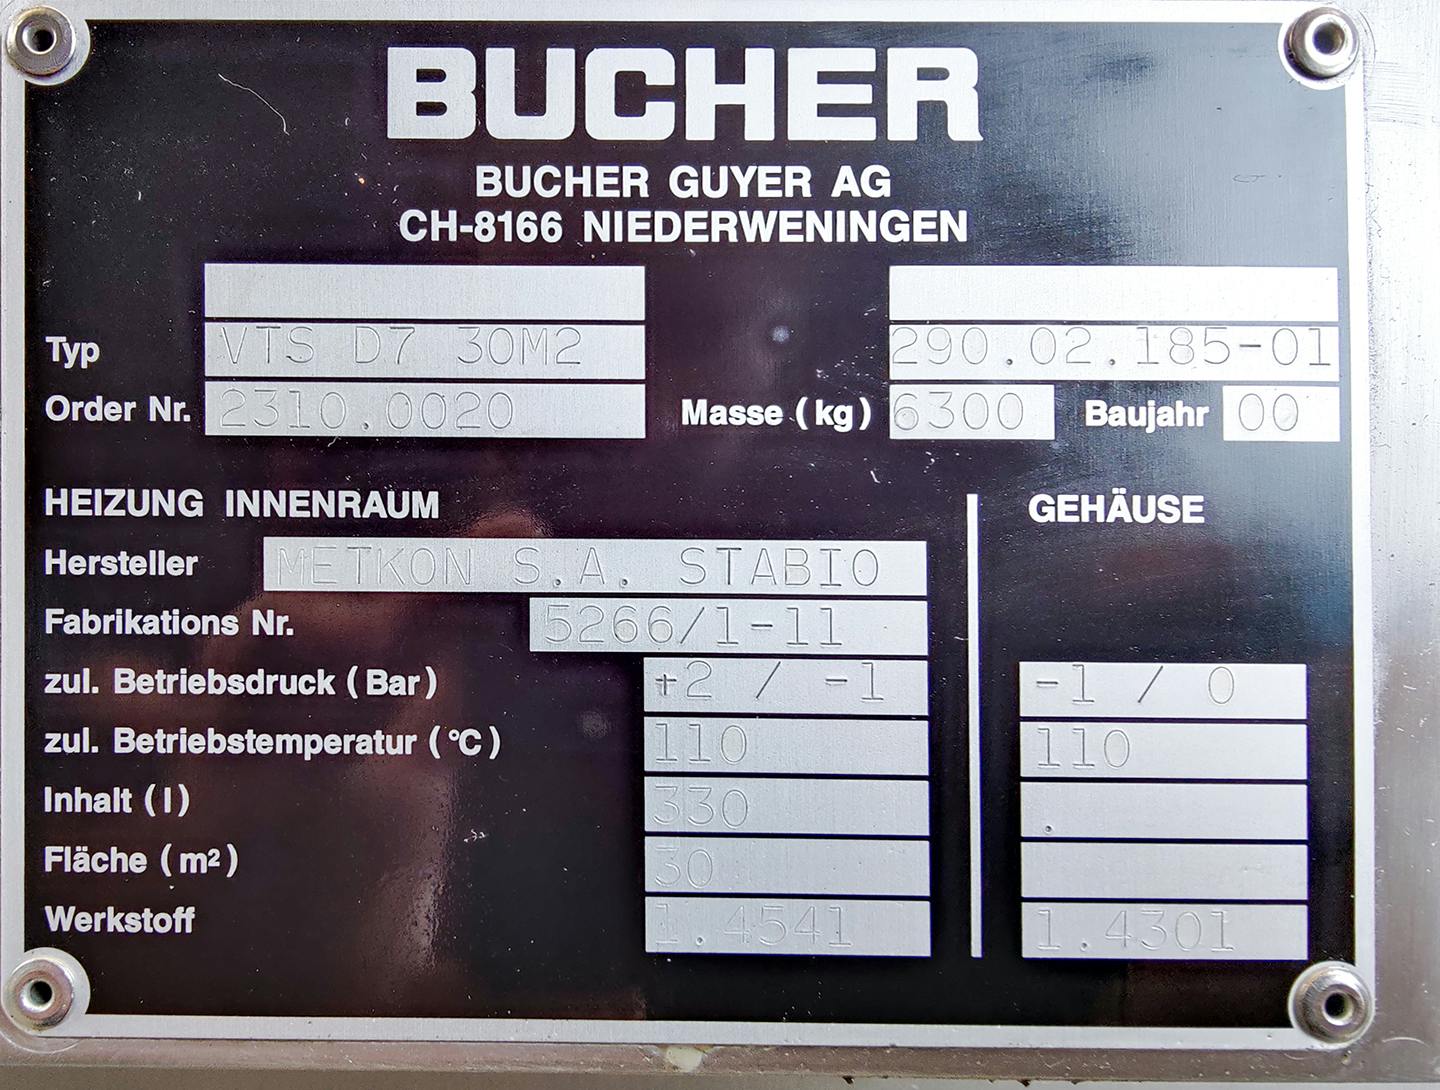 Bucher VTS-D7 30m2 - Traydroger - image 8